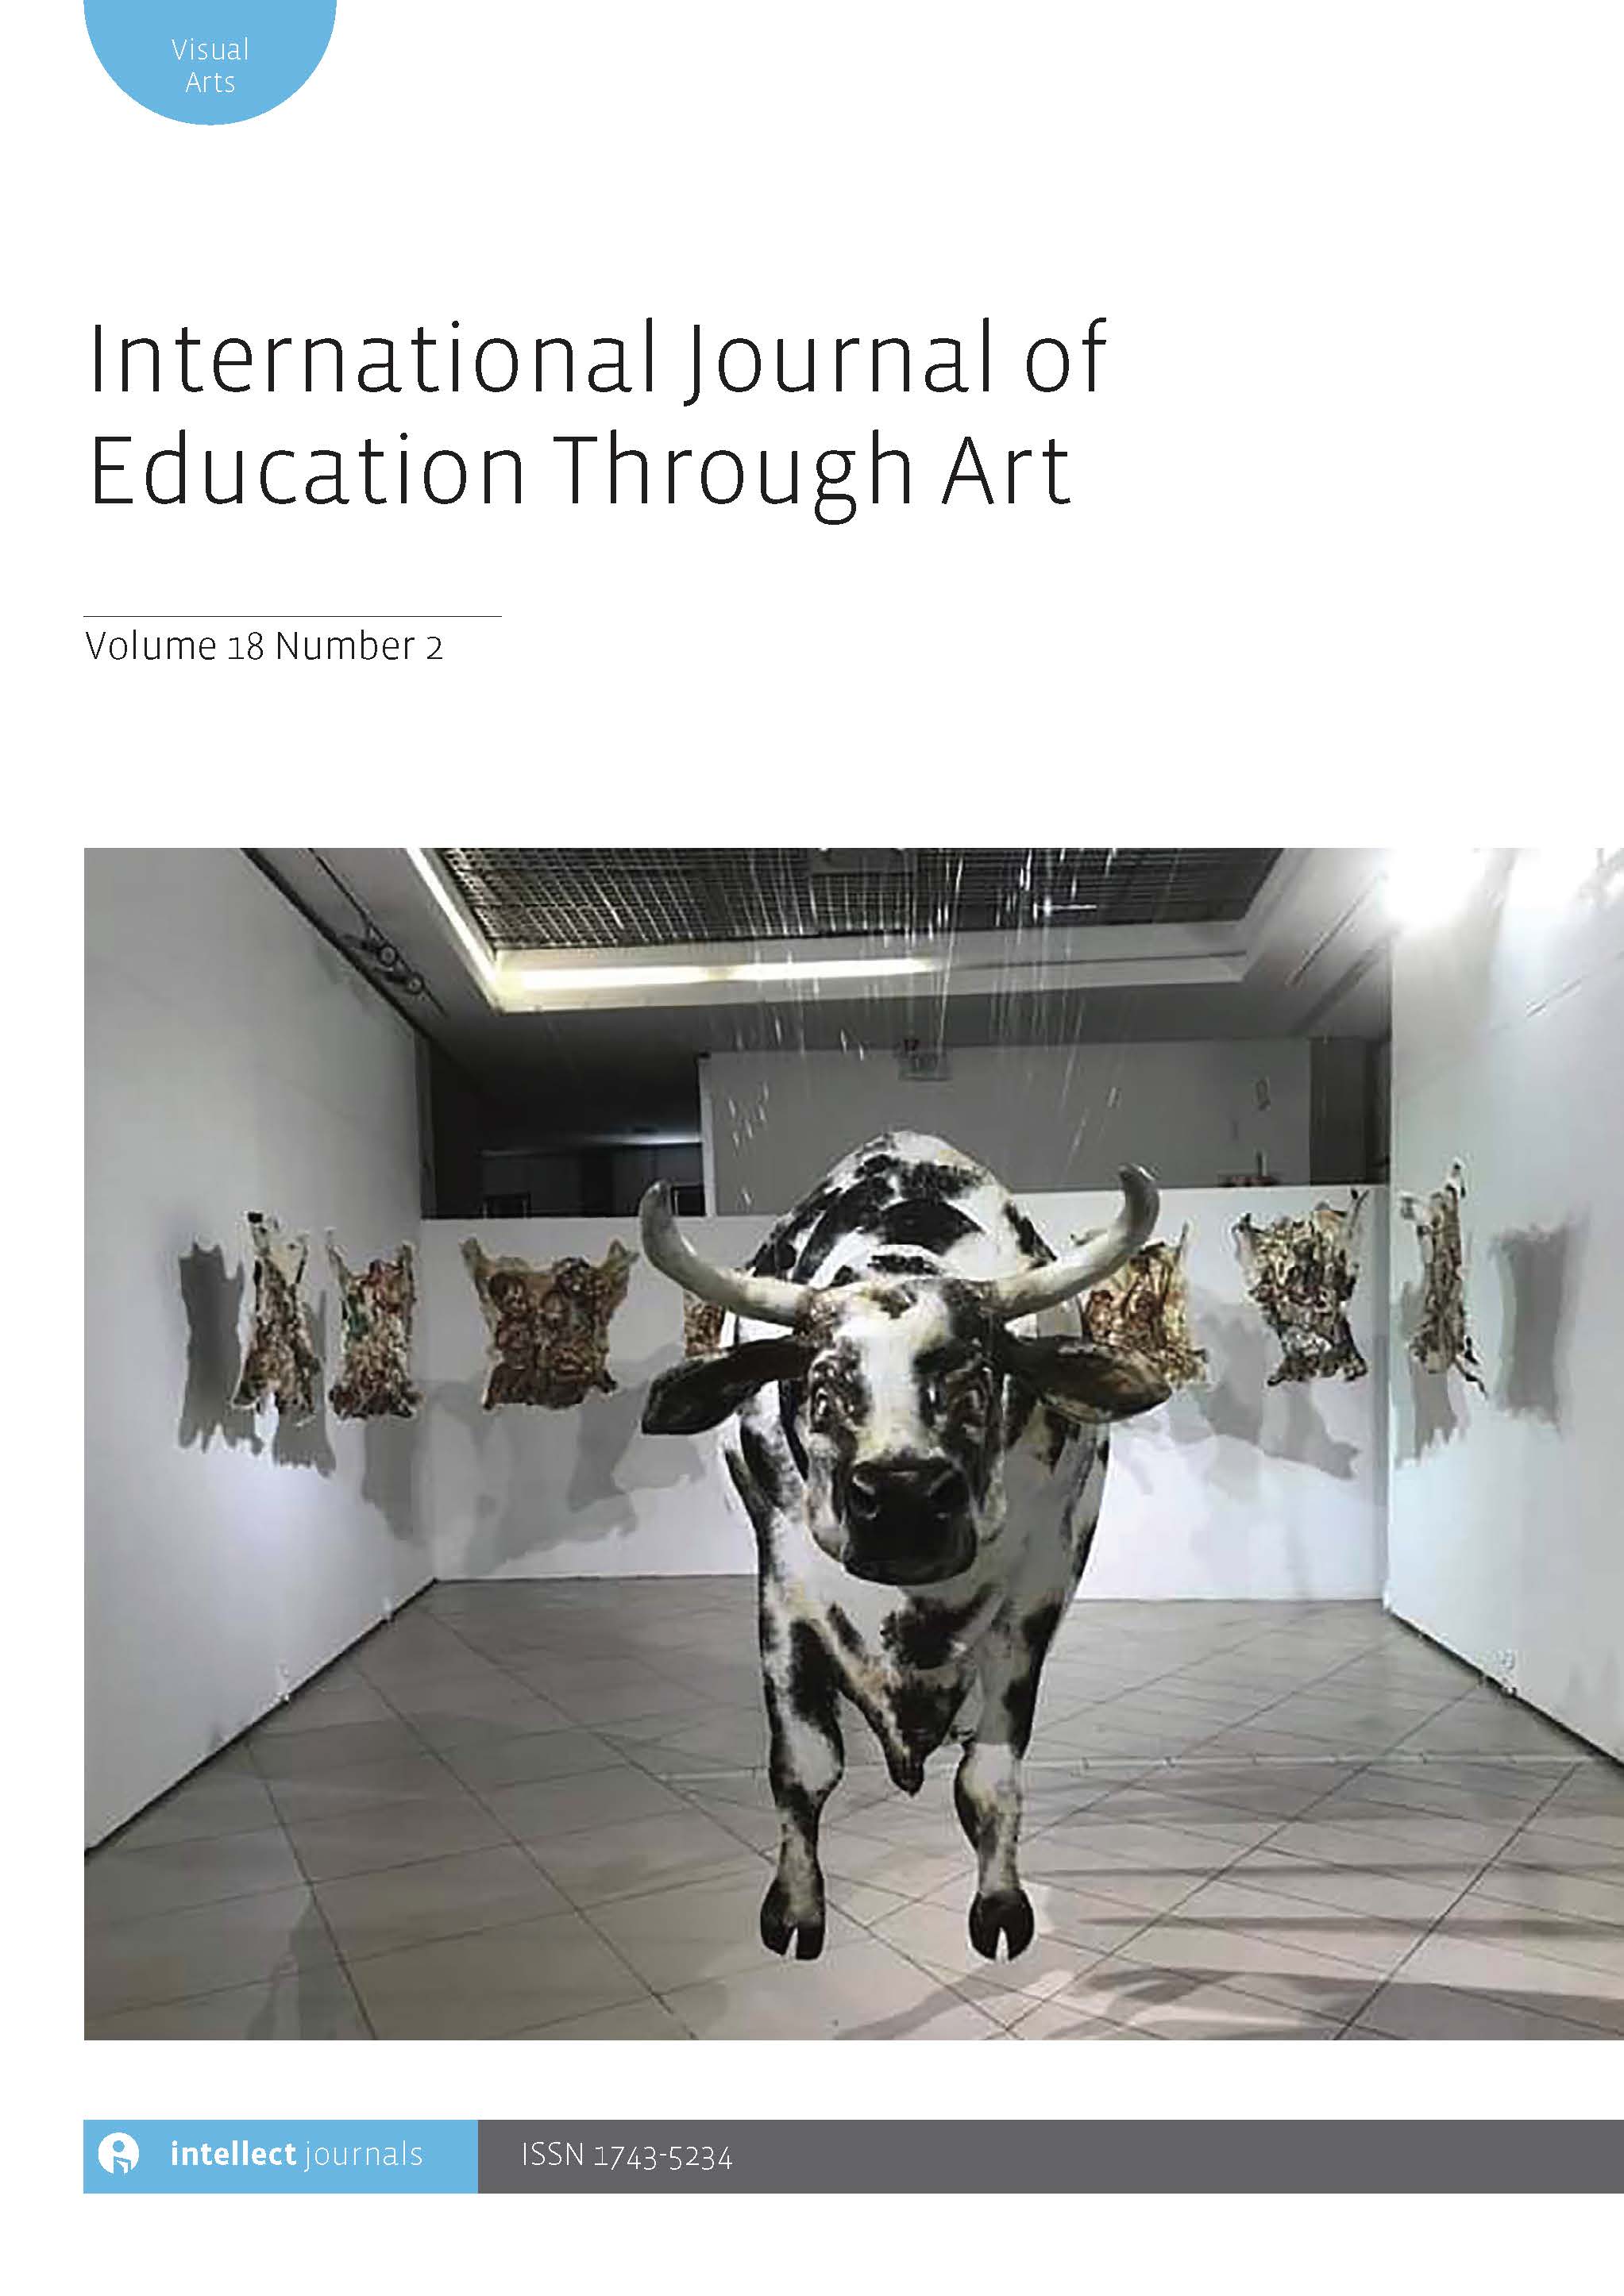 Archives | International Journal of Education Through Art